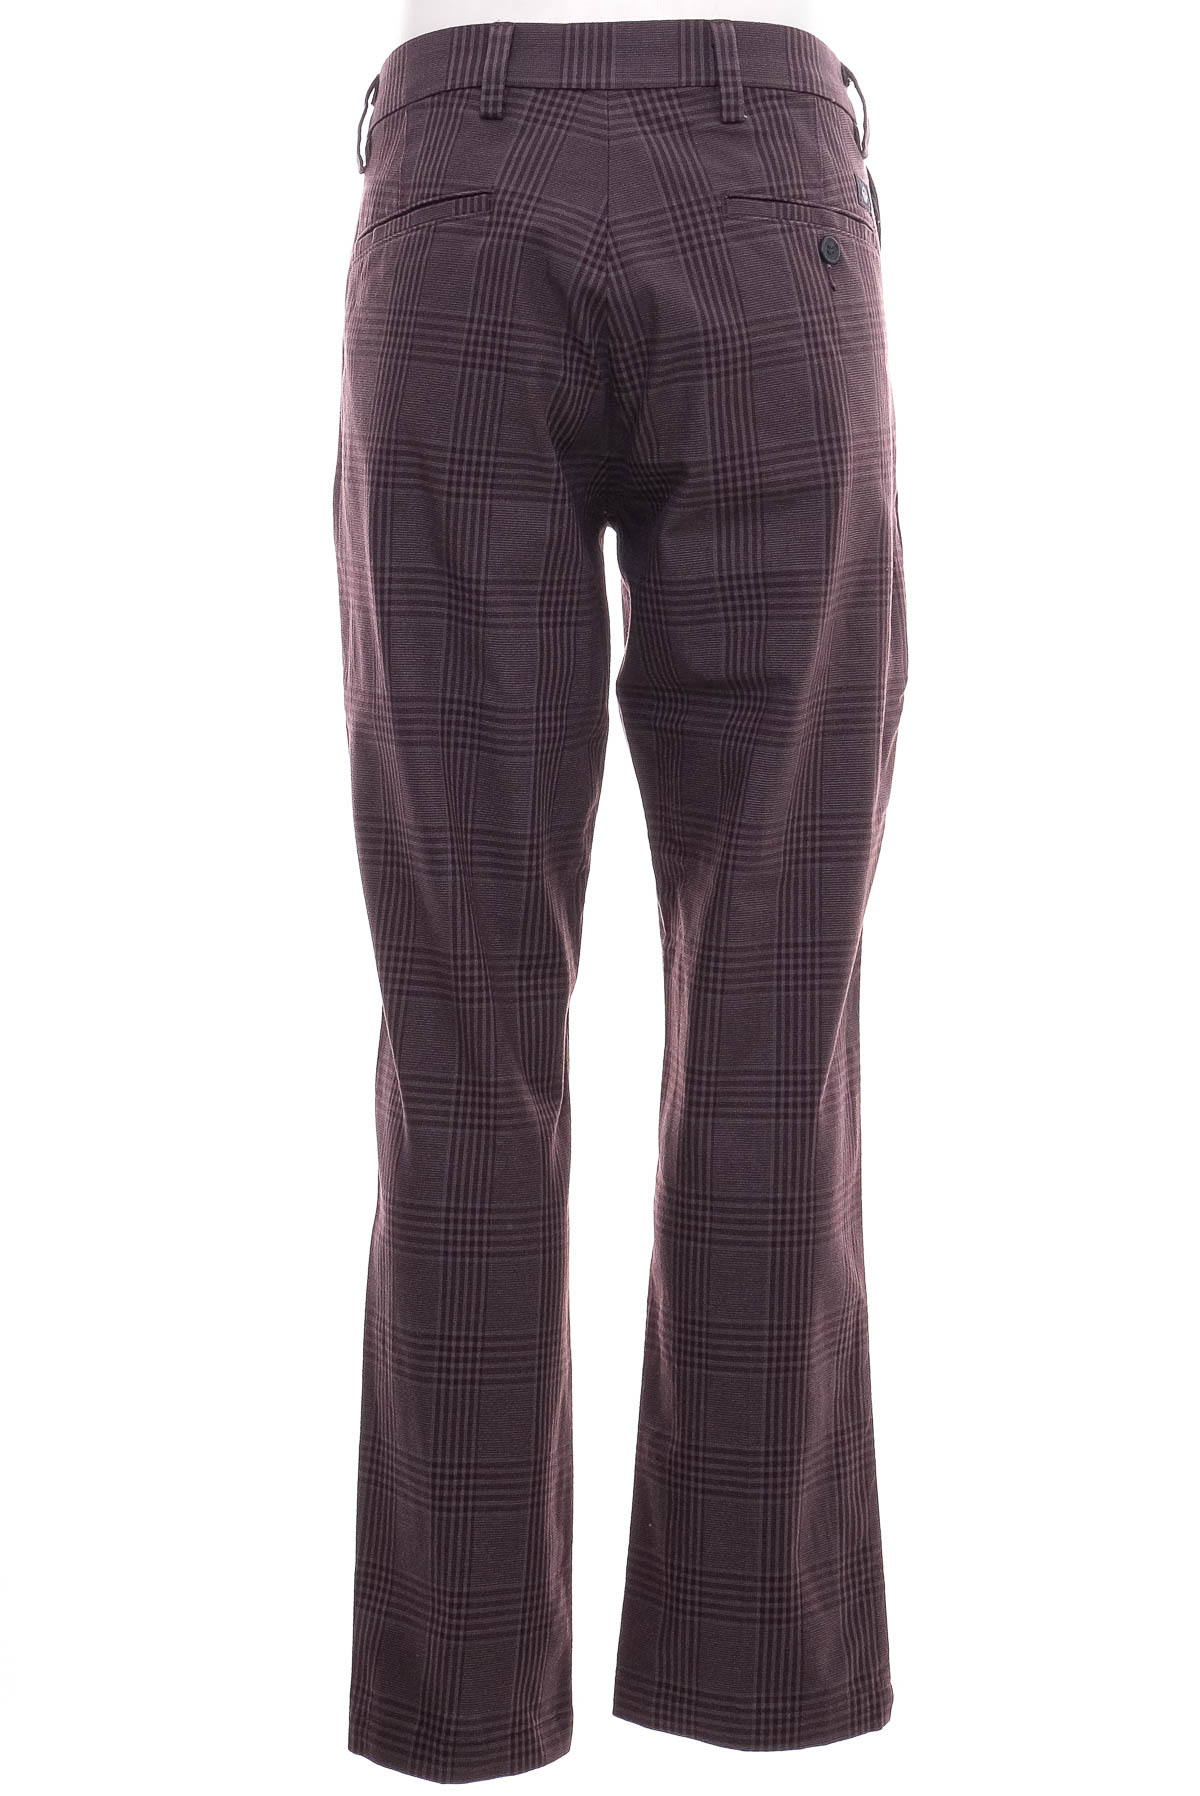 Pantalon pentru bărbați - DOCKERS - 1